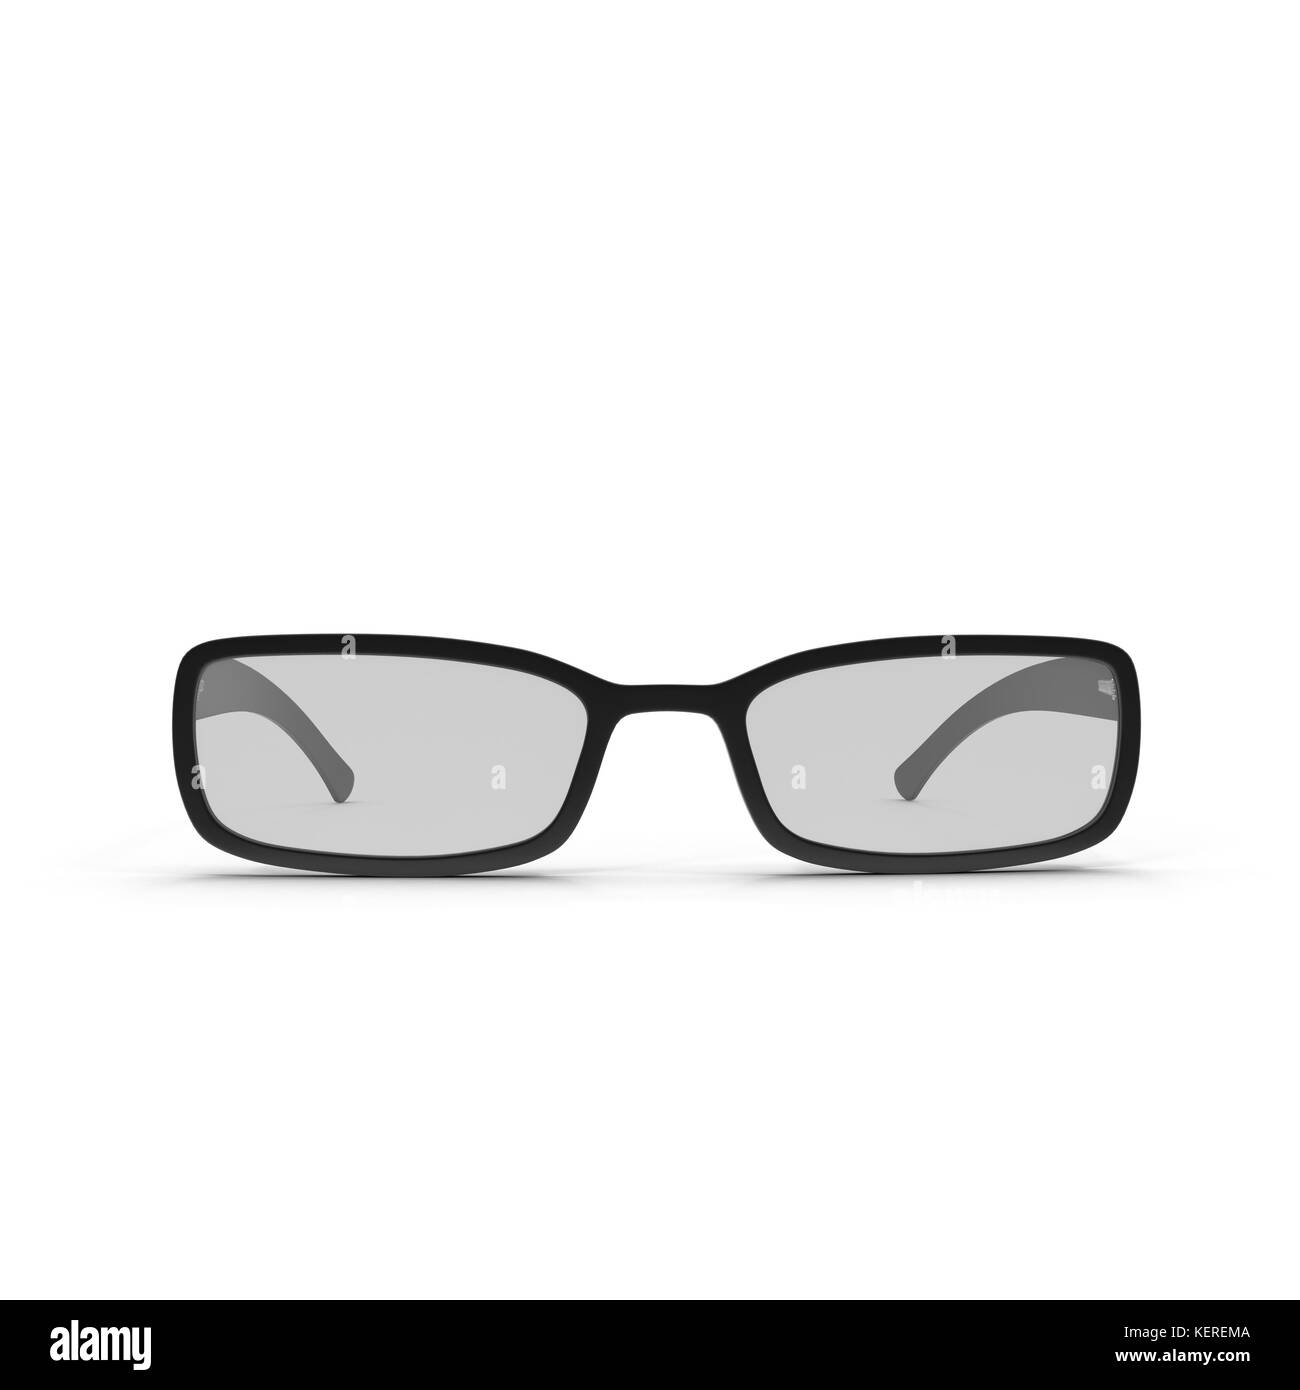 Black Eye Glasses Isolated on White 3D Illustration Stock Photo